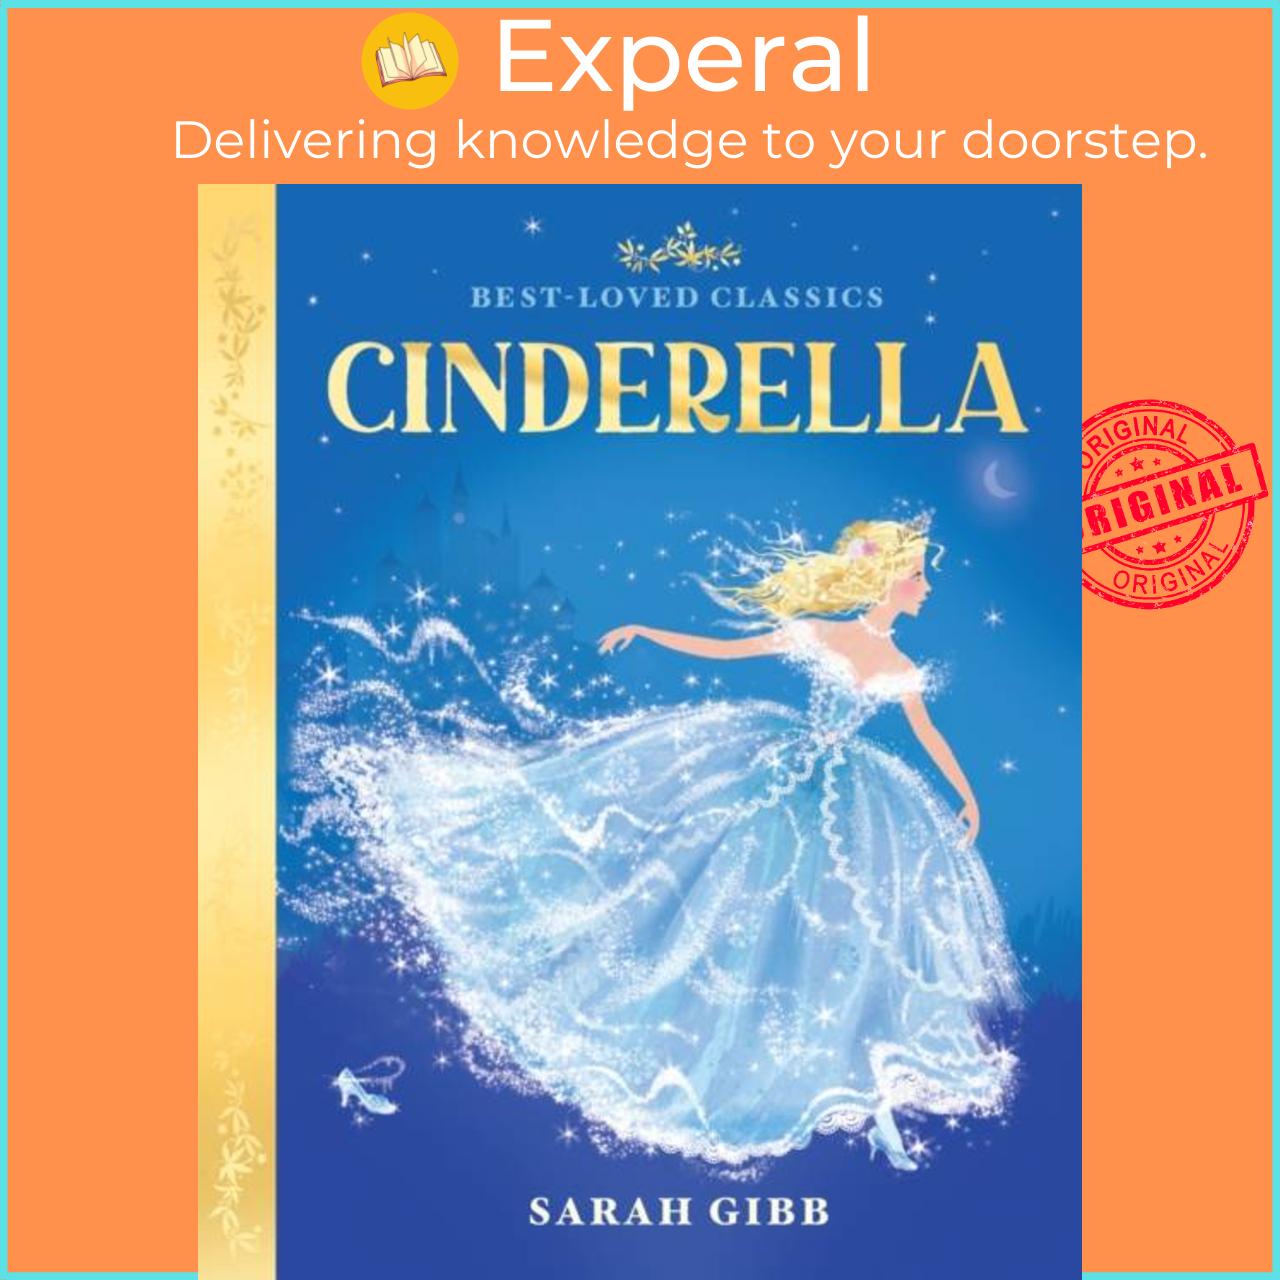 Sách - Cinderella by Sarah Gibb (UK edition, paperback)